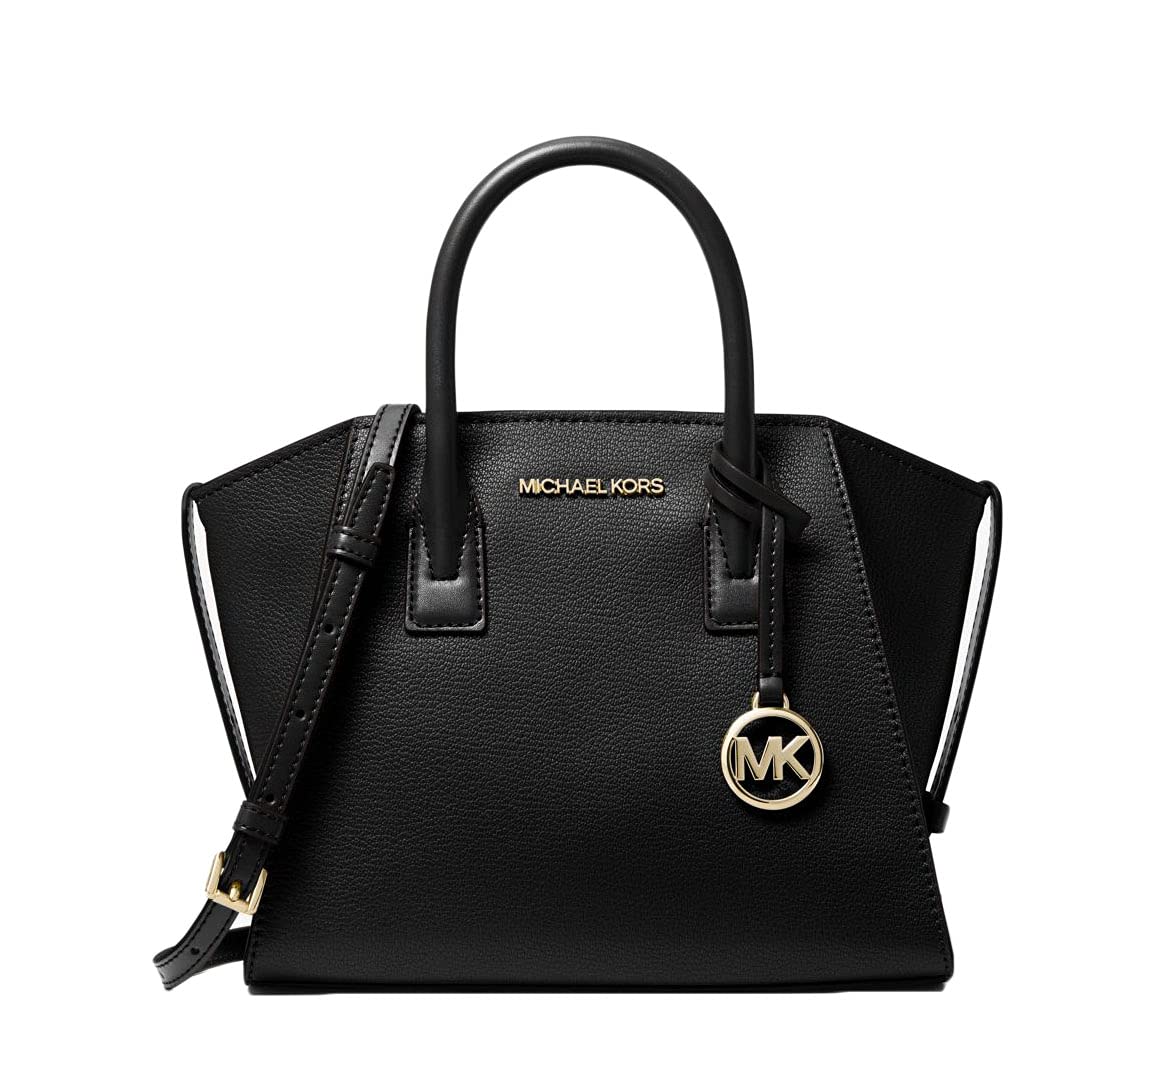 Michael Kors CrossBody Bag Black Black Handbags Amazoncom